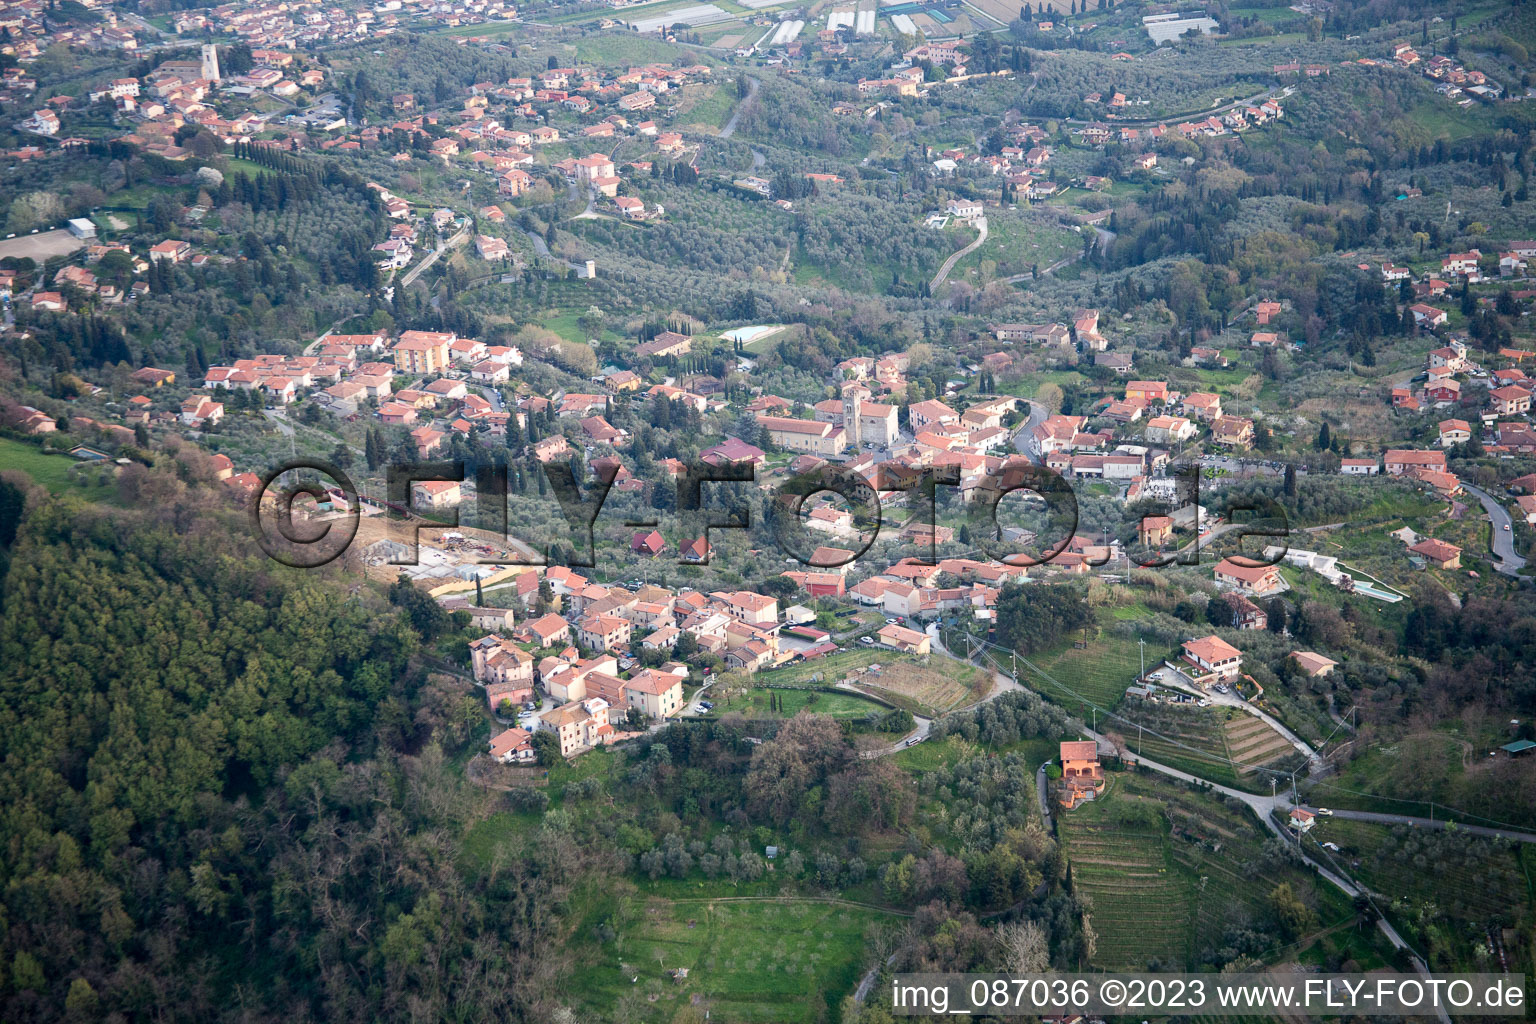 Pedona(I-Toskana) im Bundesland Toscana, Italien vom Flugzeug aus